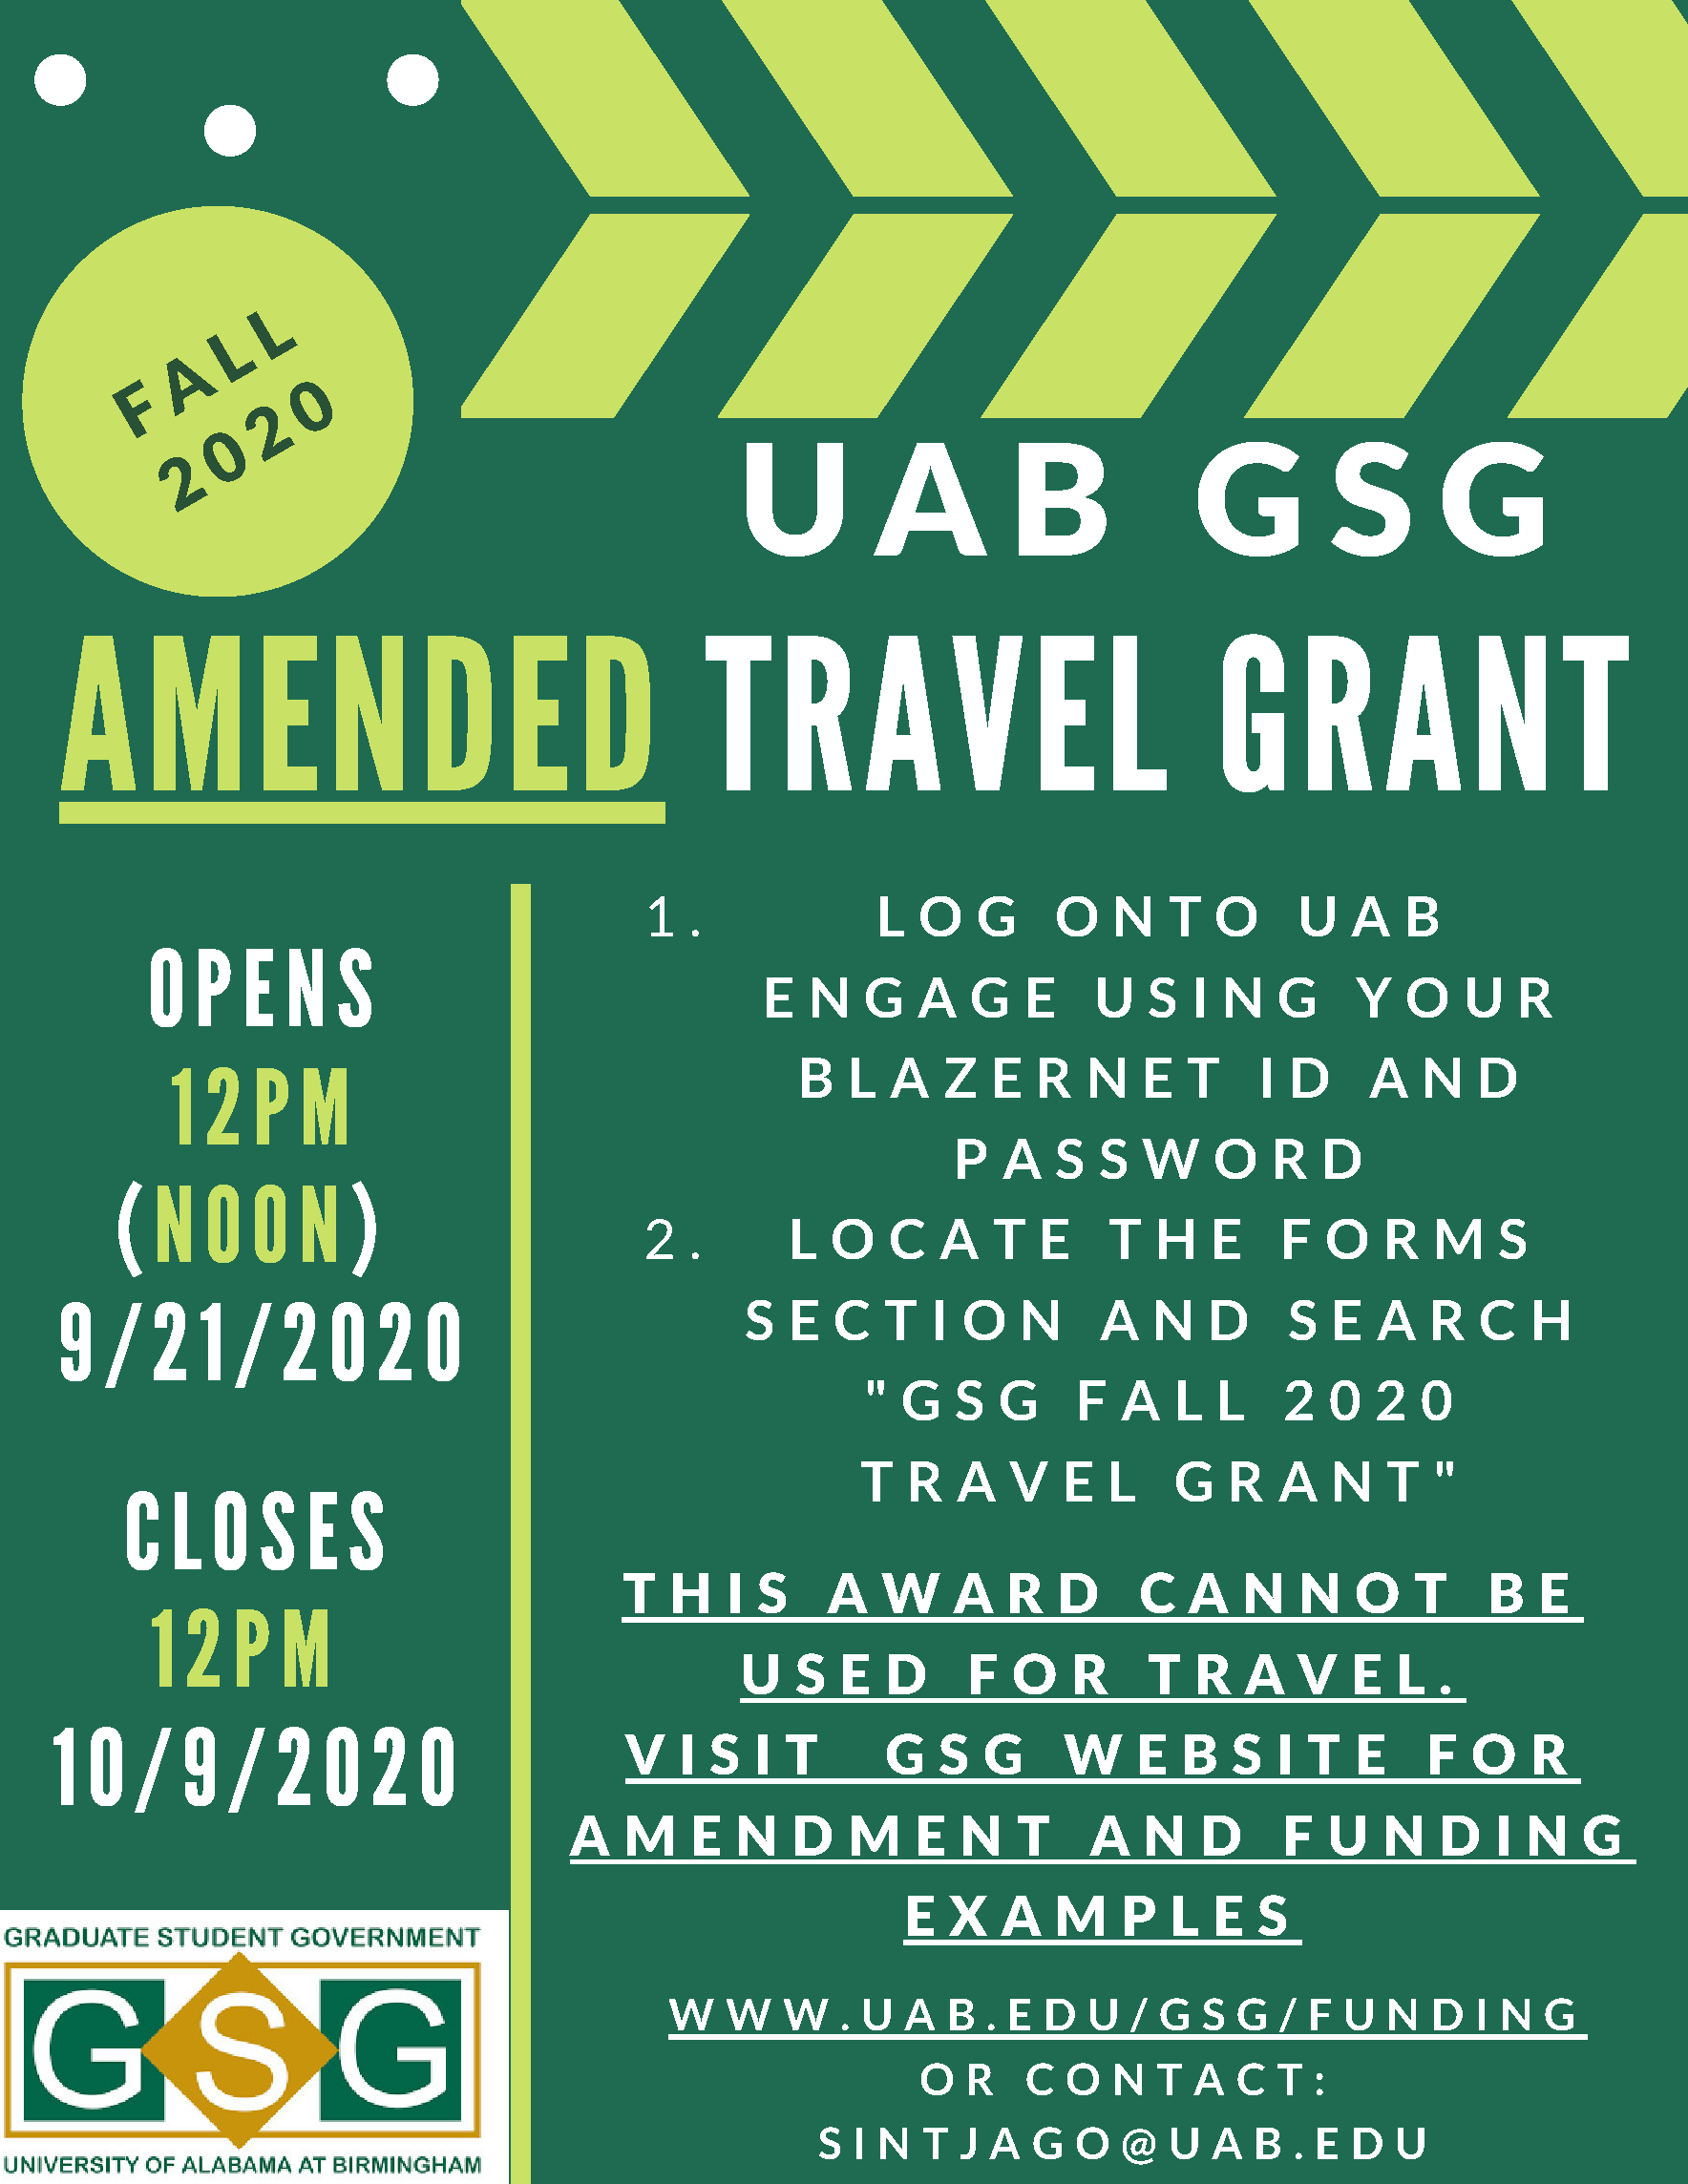 travel grants student finance